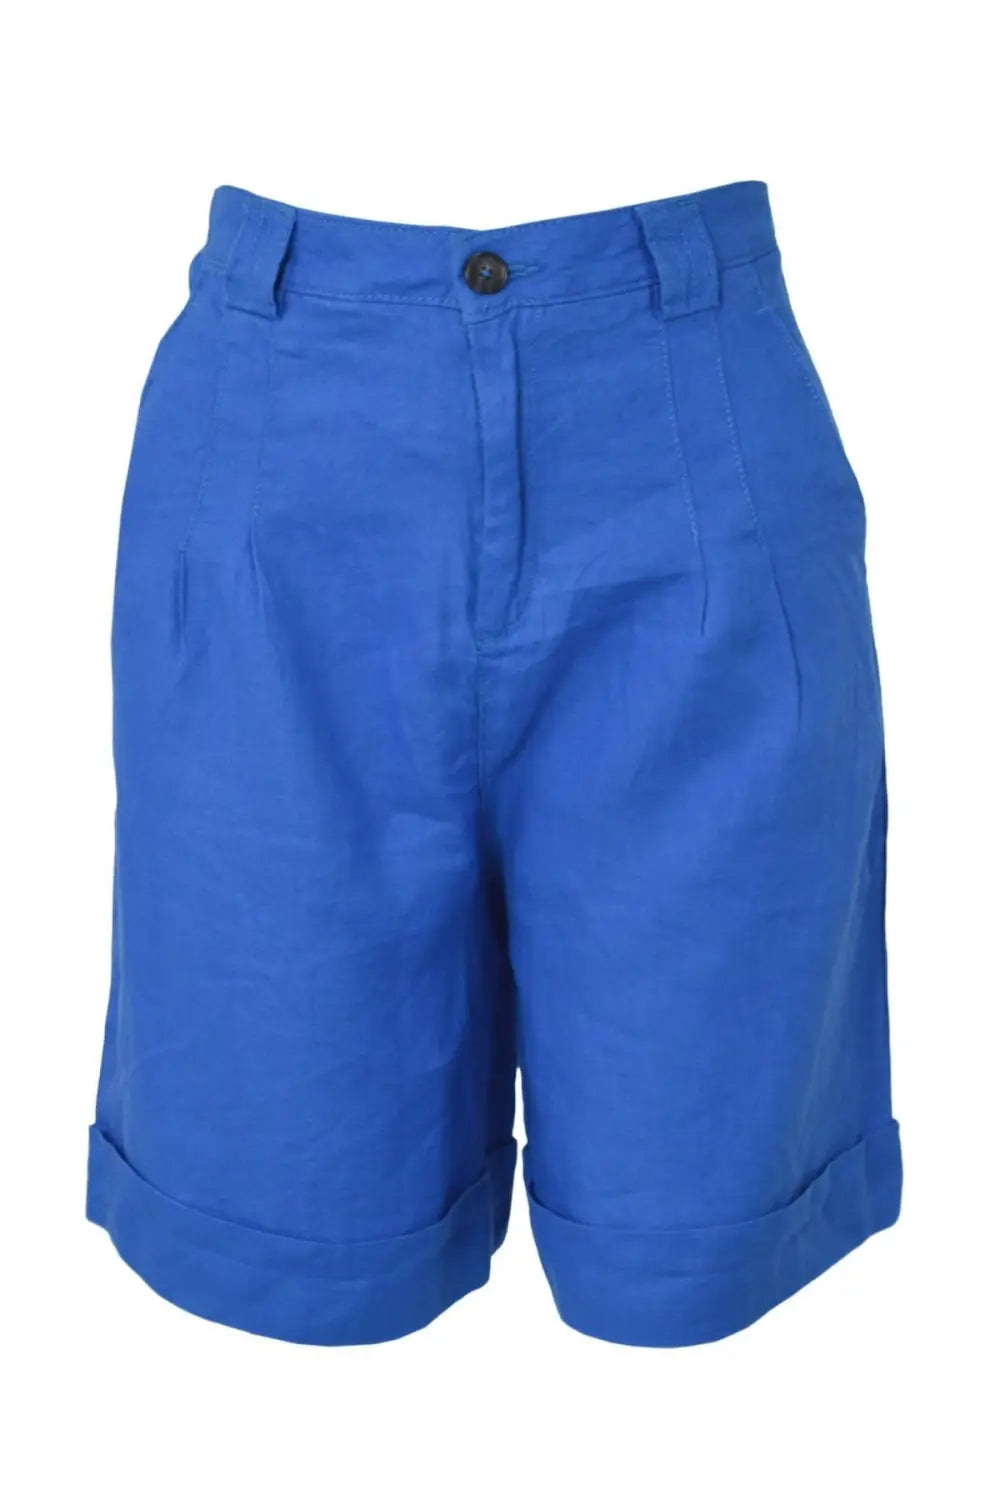 Benetton Long Cotton Bermuda Shorts